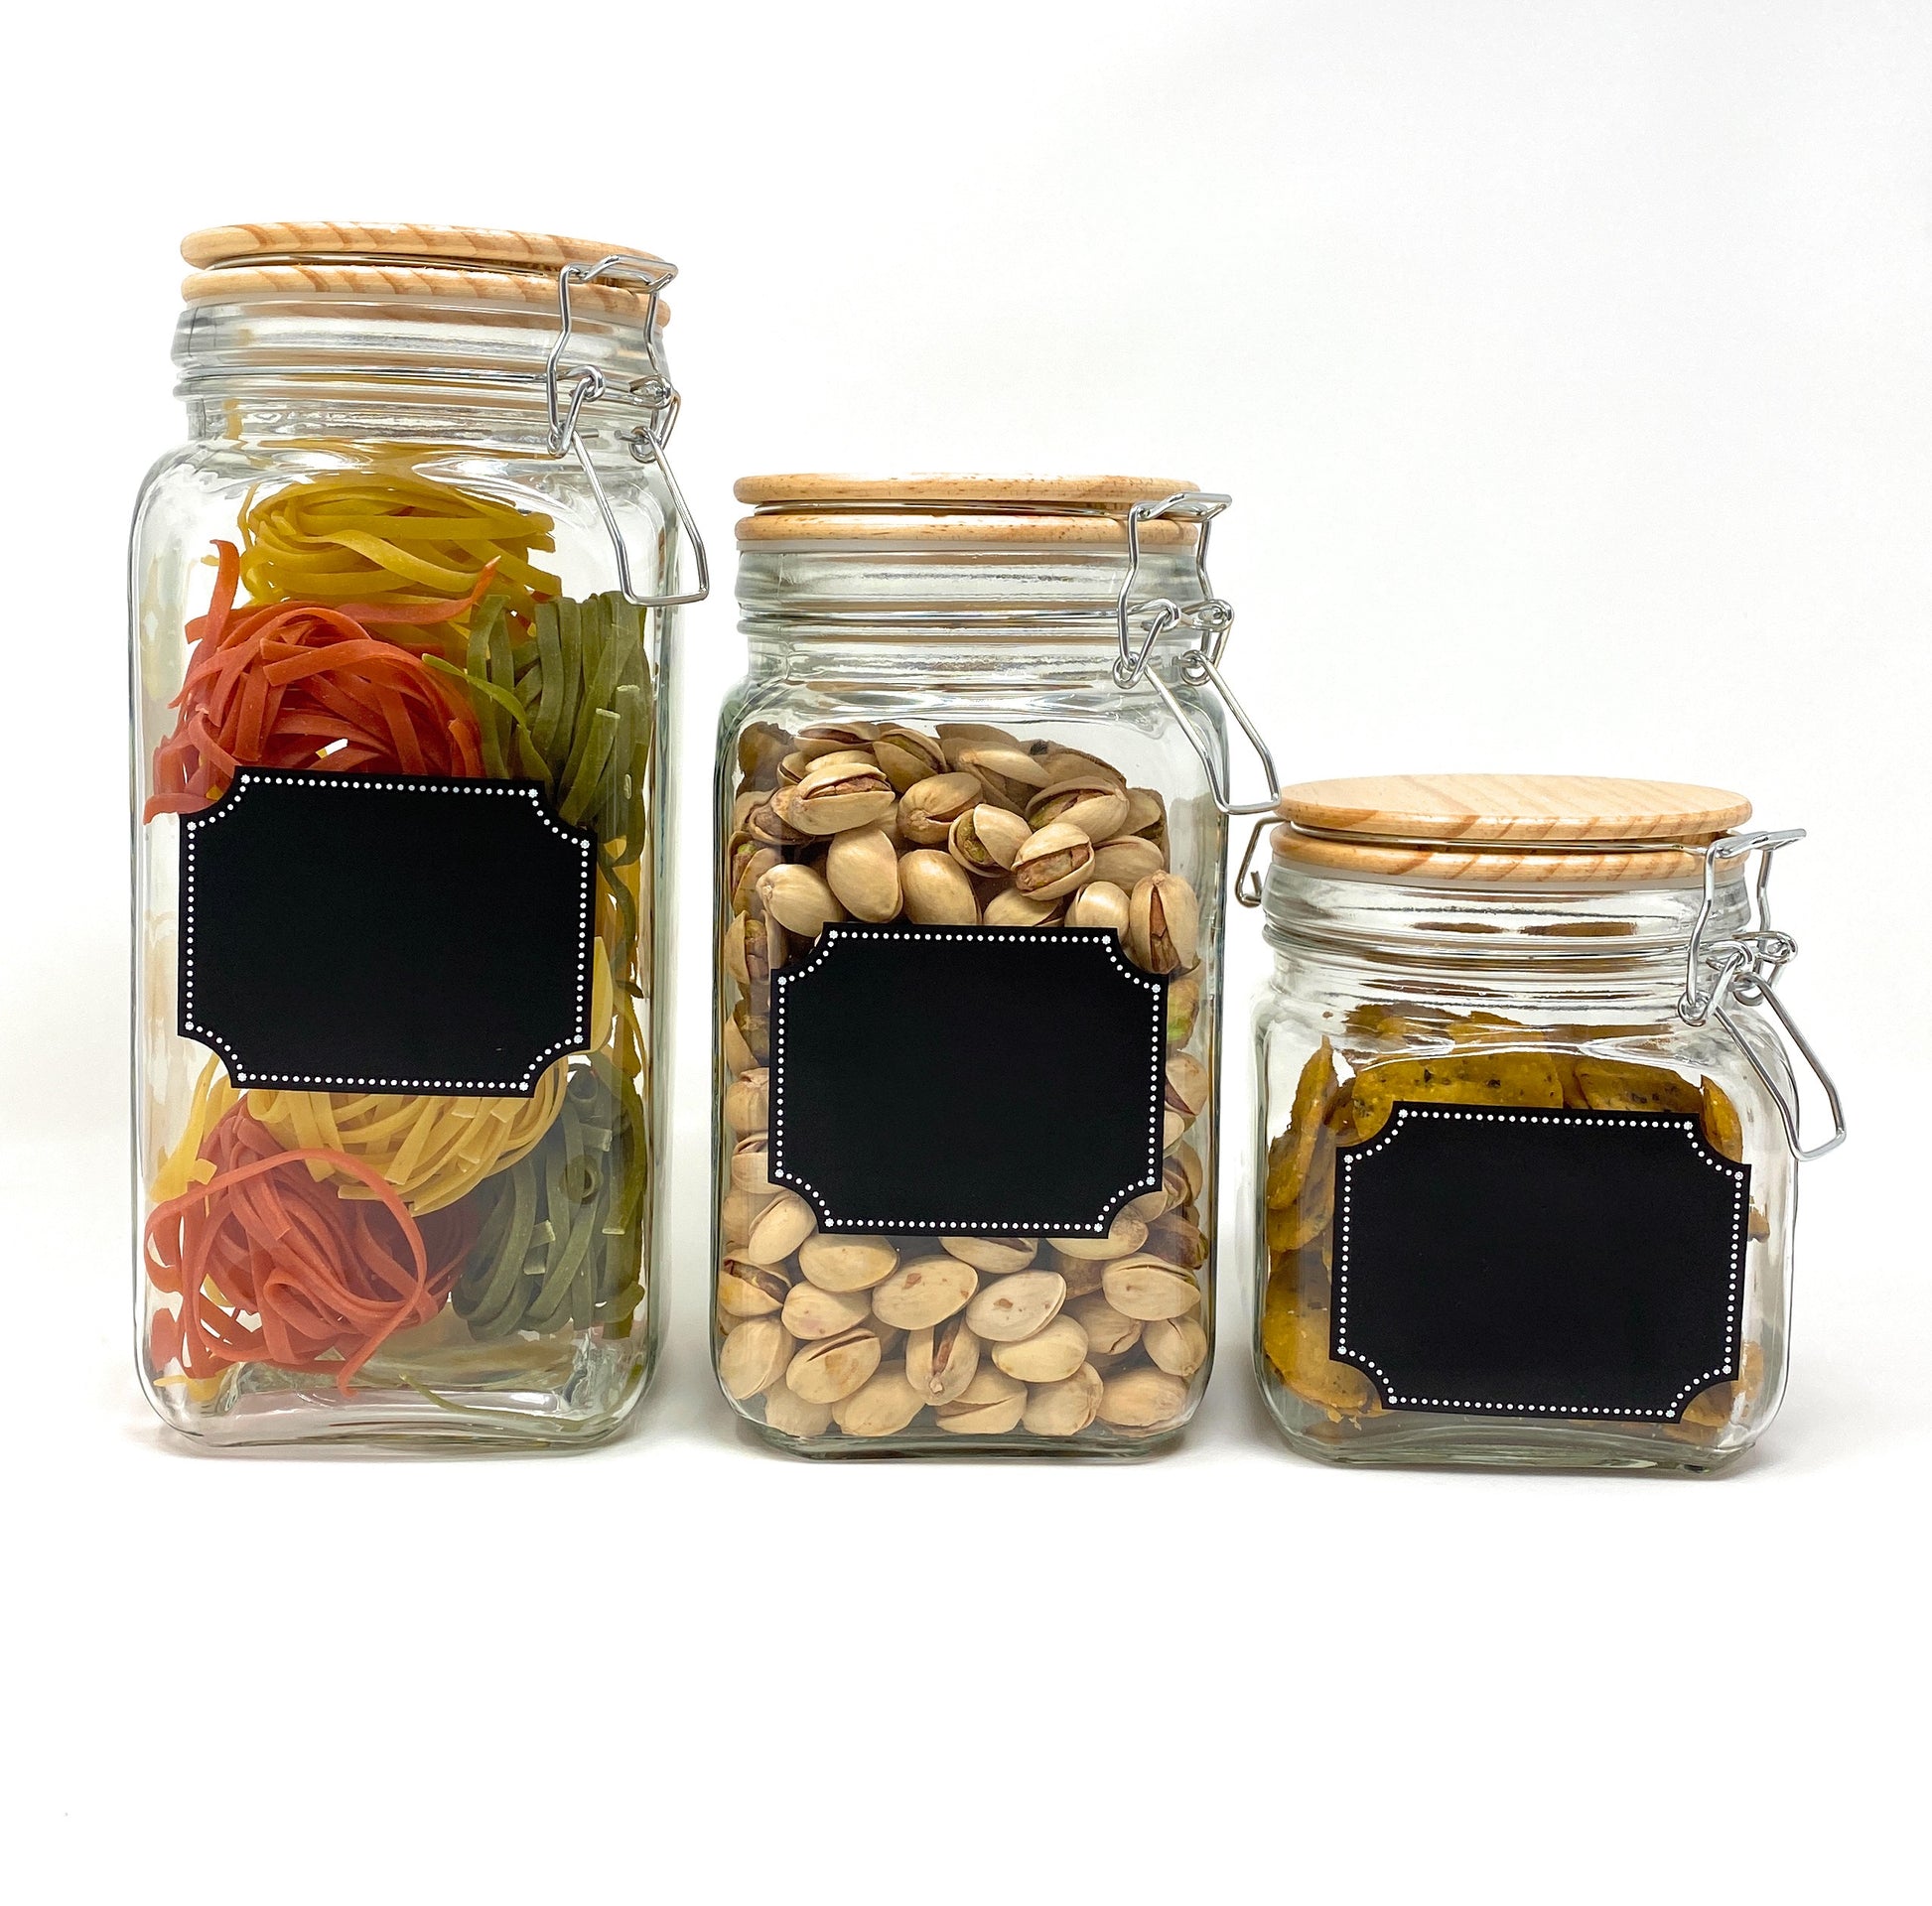 Vetri 46 oz Glass Storage Jar - with Lid, Chalkboard Label - 3 1/2 inch x 3 1/2 inch x 5 3/4 inch - 1 Count Box, Clear